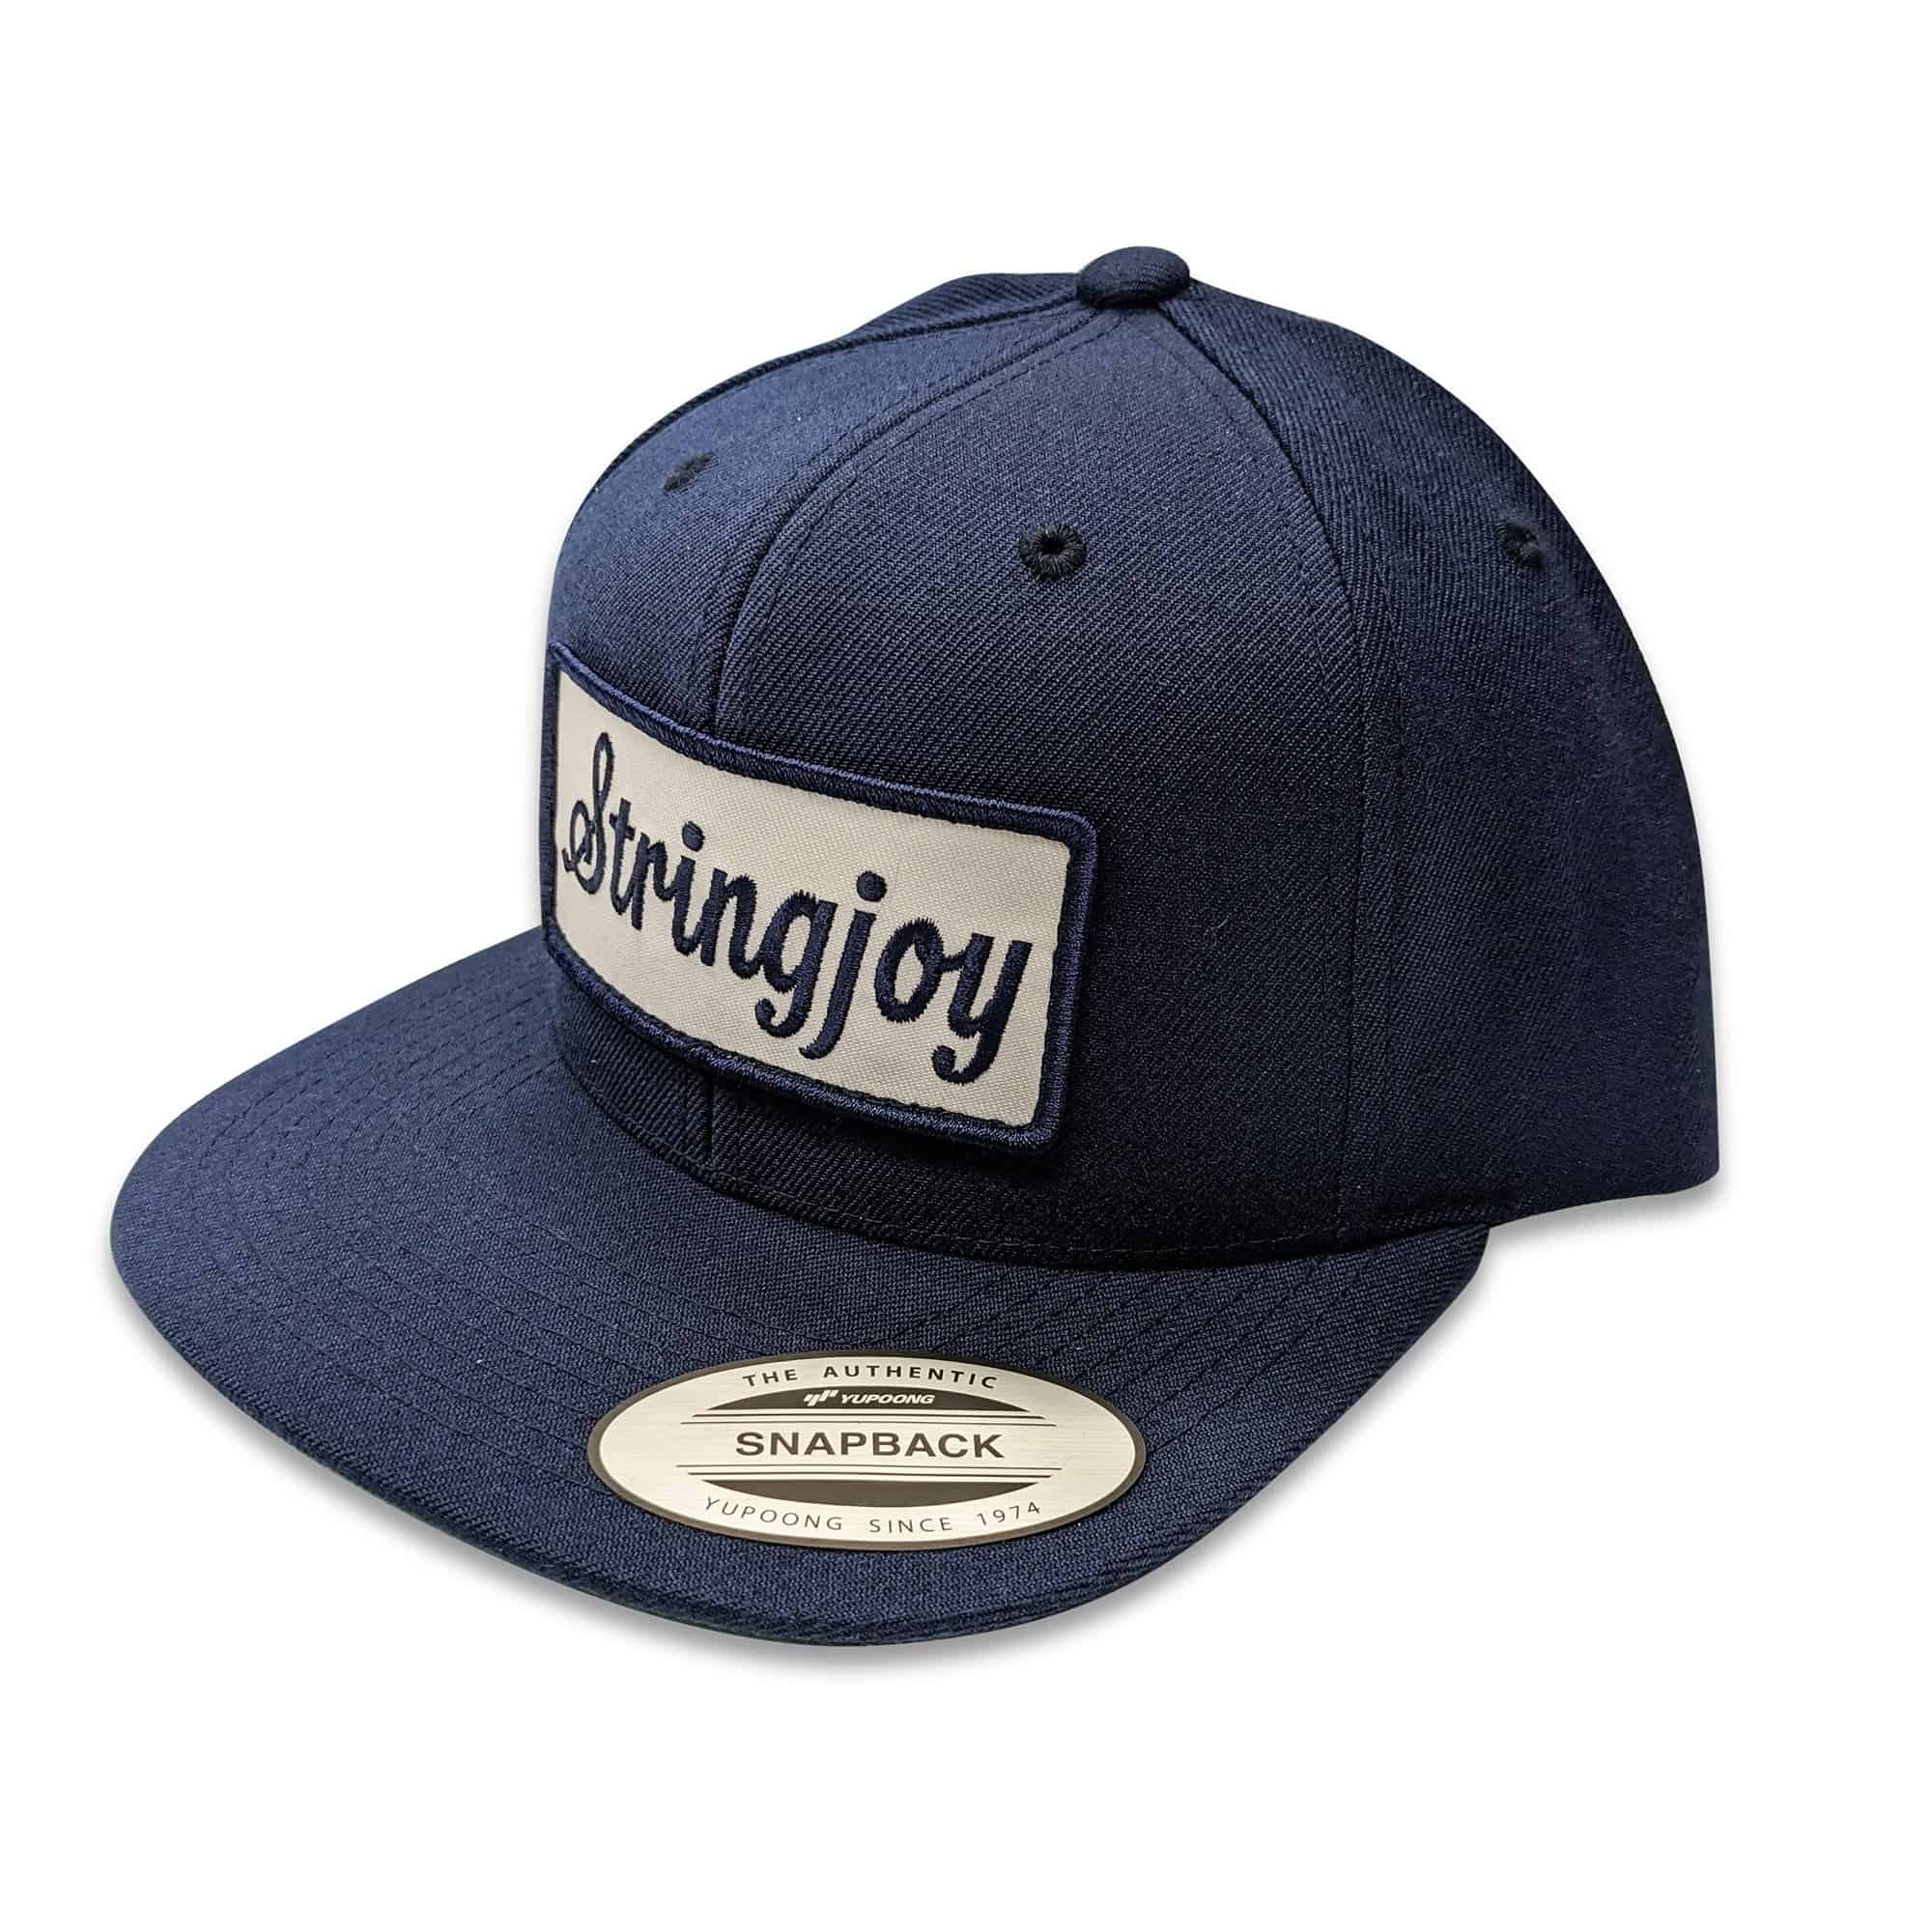 Stringjoy Mechanic Patch Hat | Stringjoy